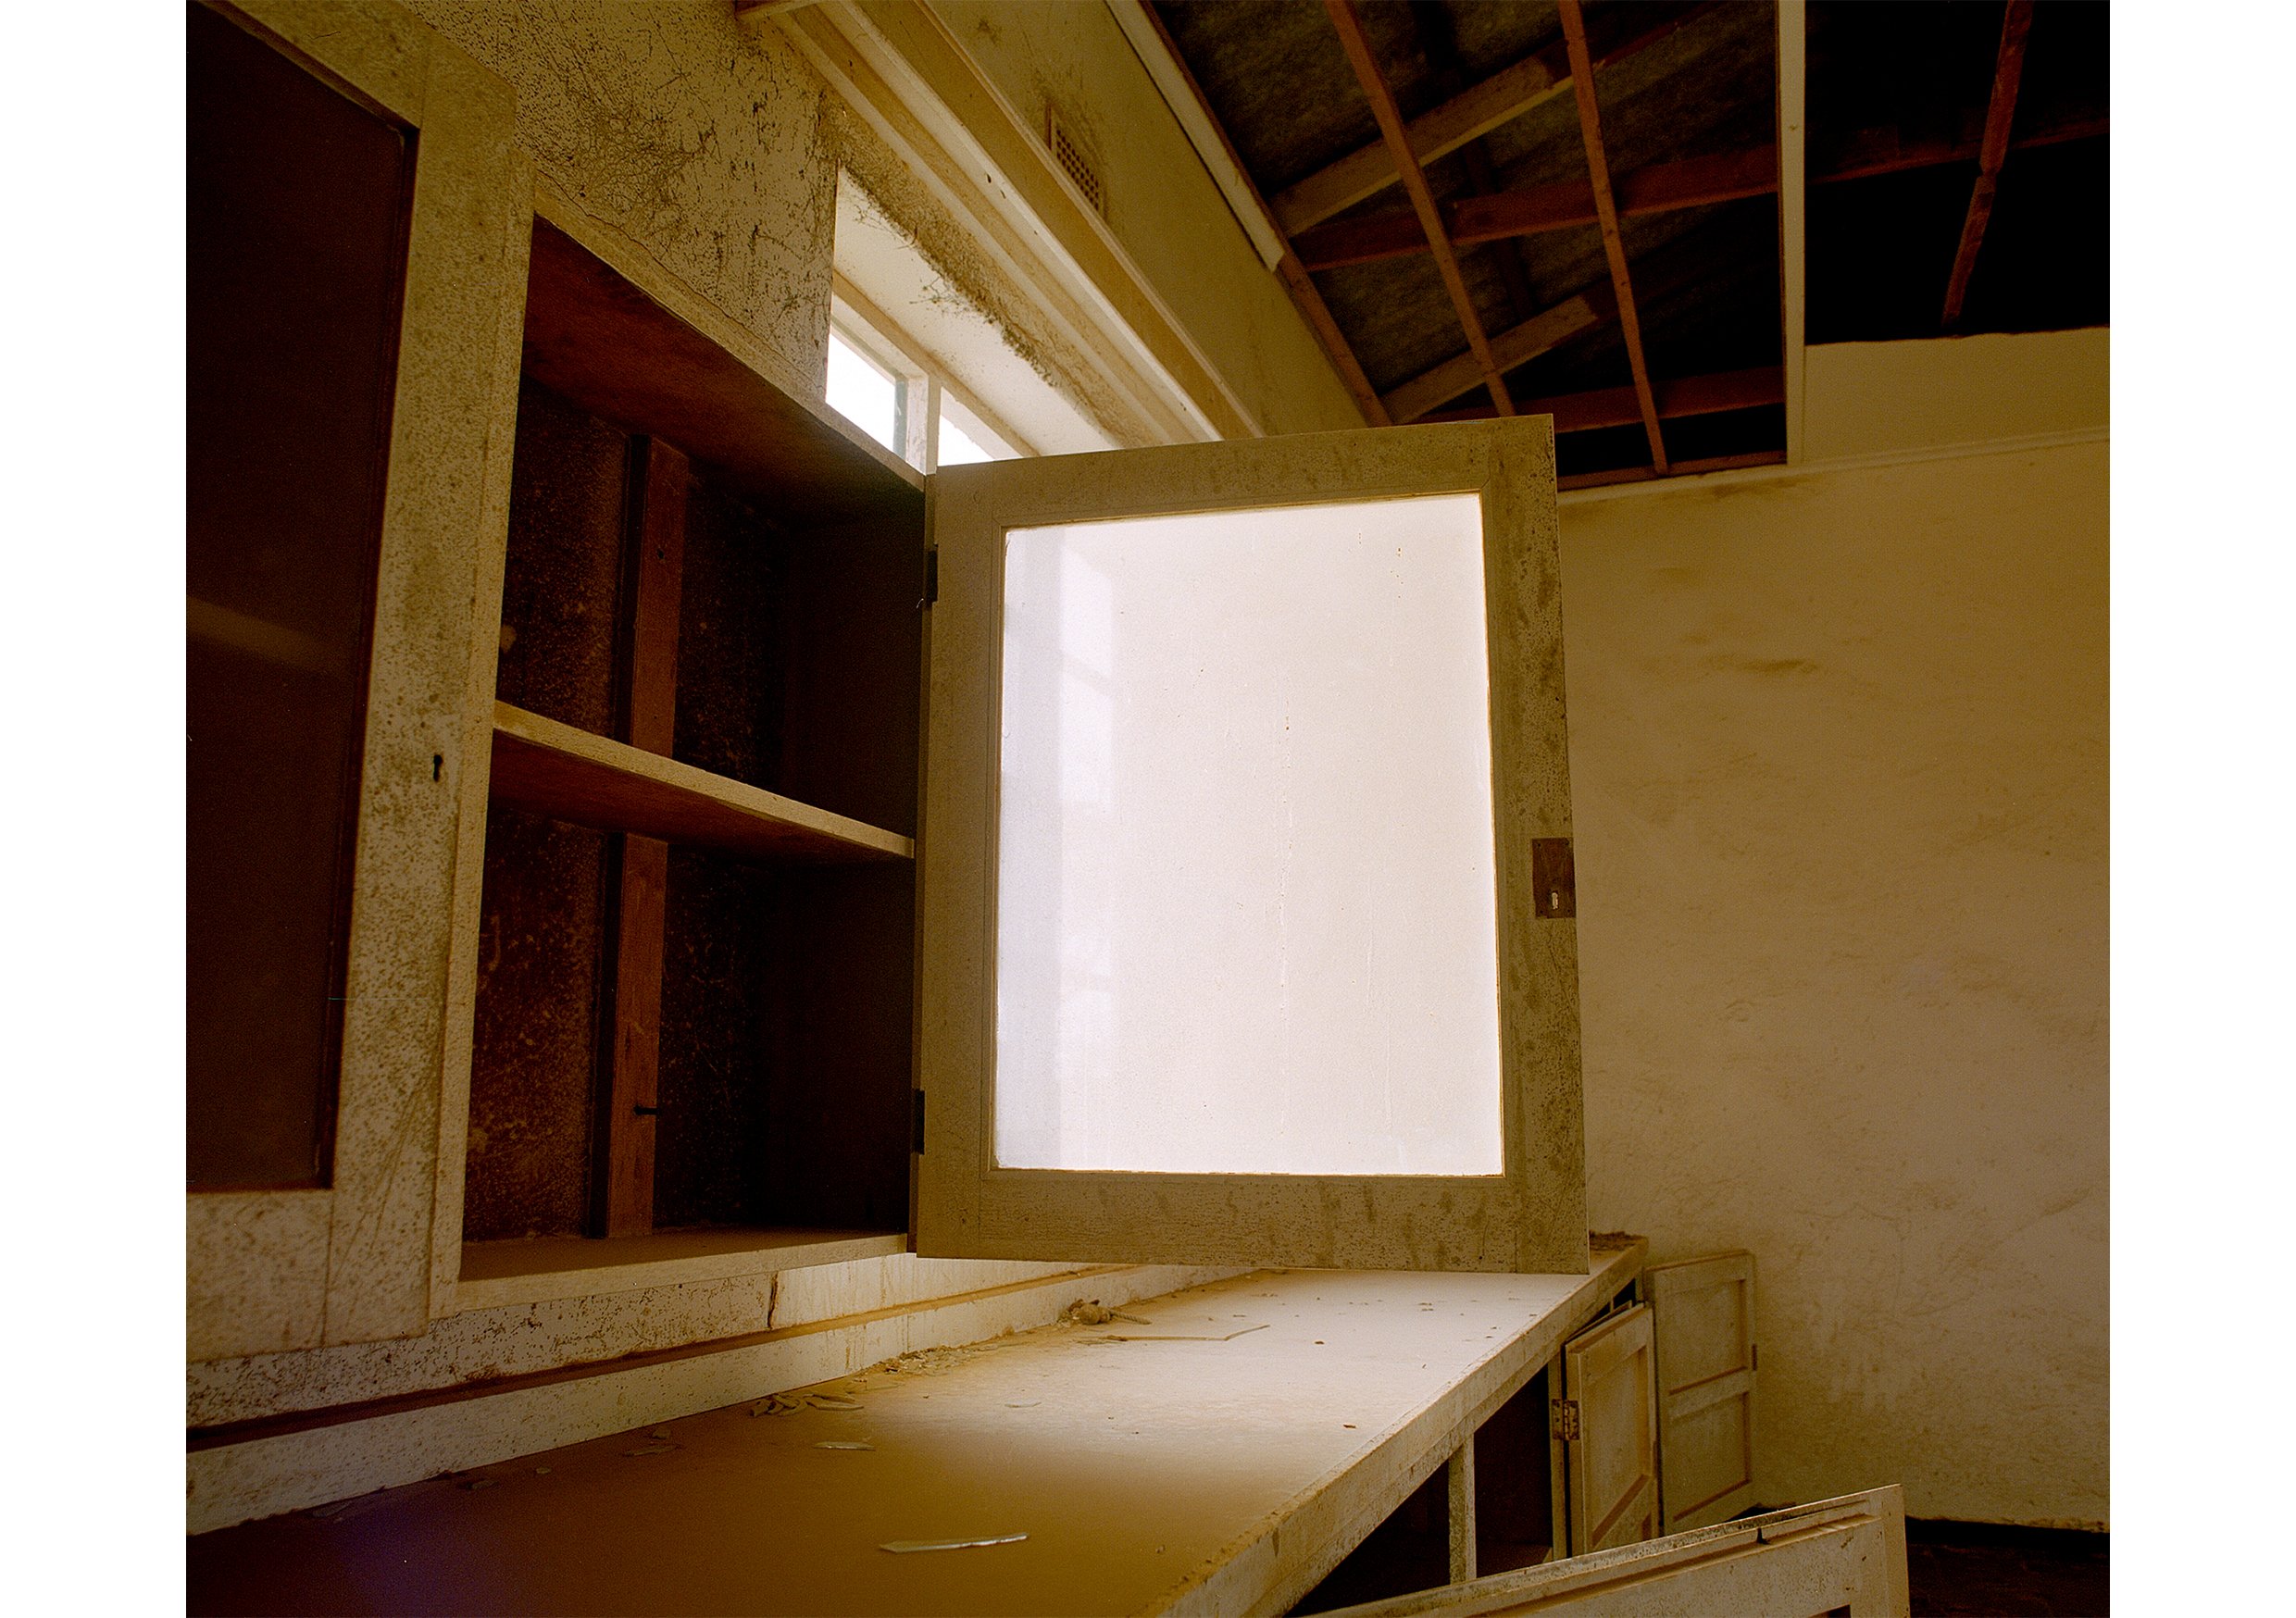  Dusty Window, Kleinsee  